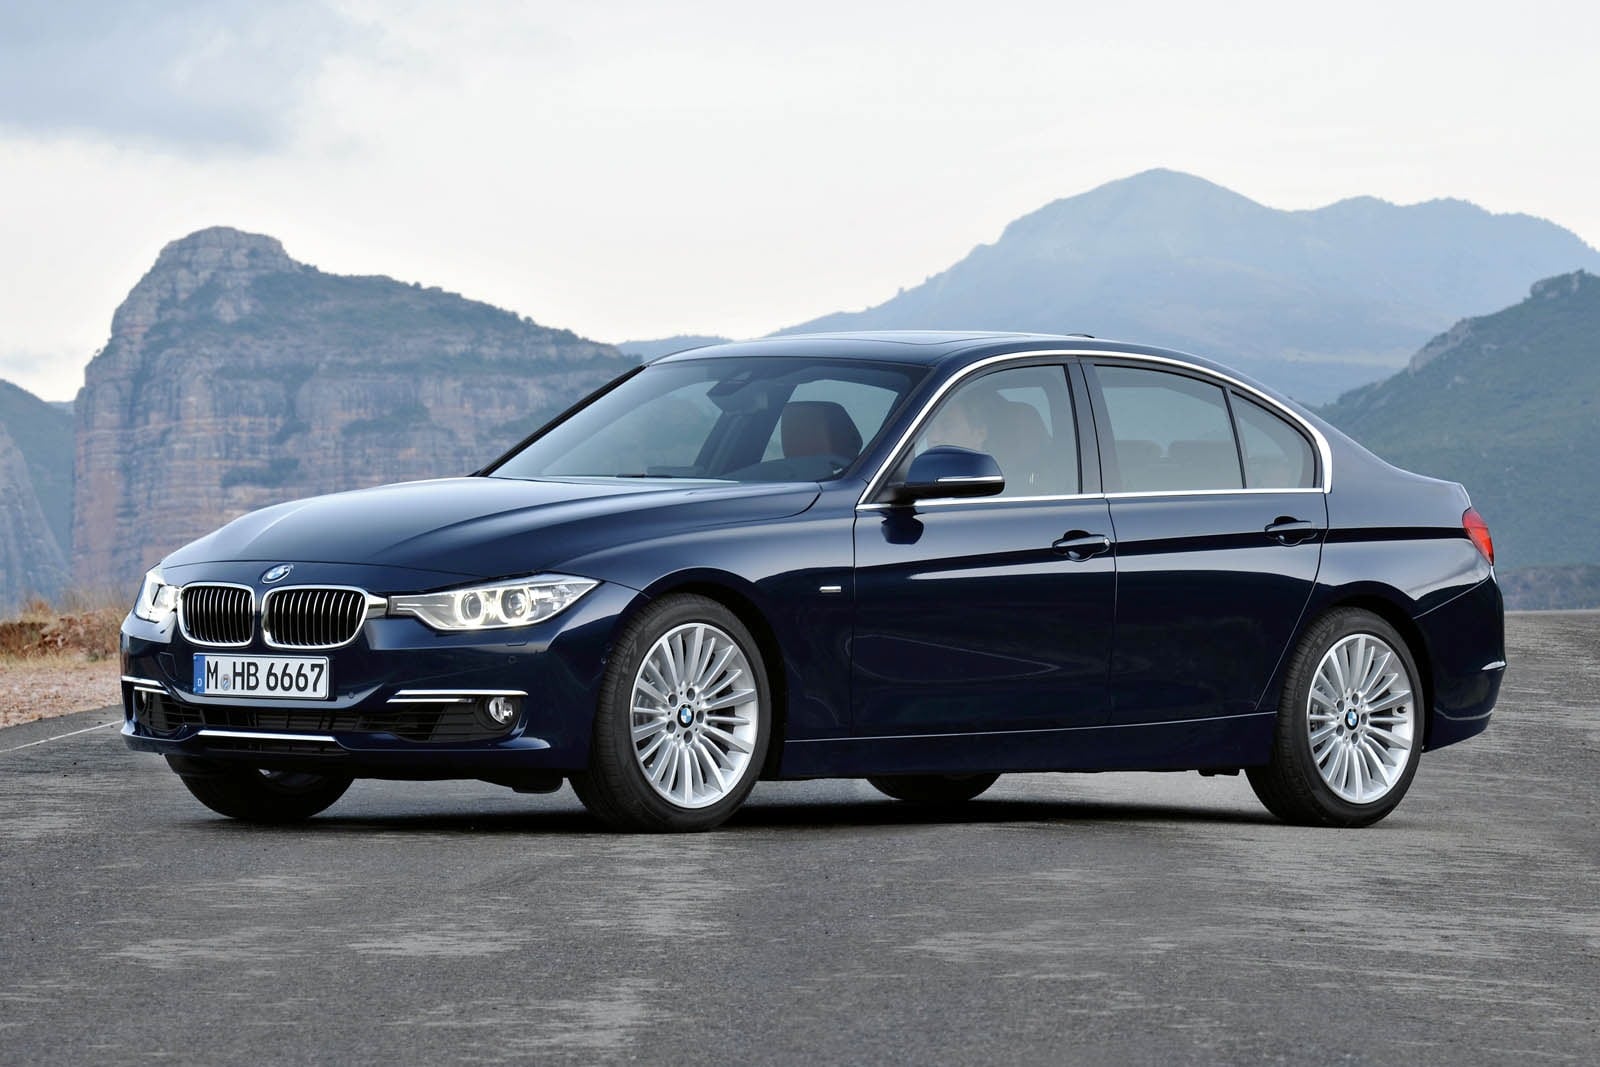 Used 2012 BMW 3 Series Sedan Review | Edmunds